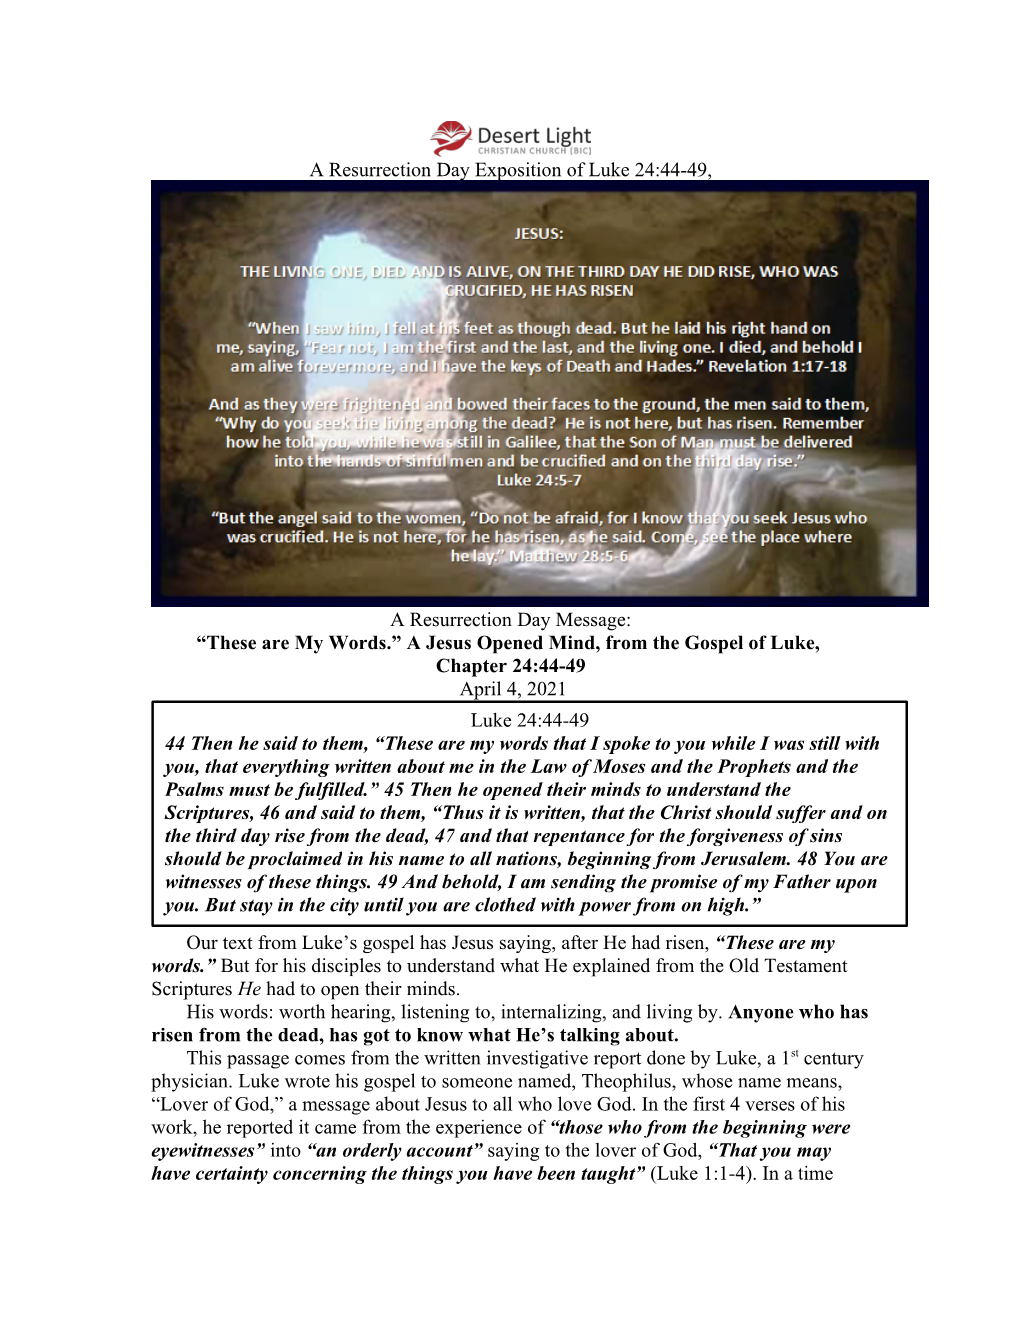 A Resurrection Day Exposition of Luke 24:44-49, a Resurrection